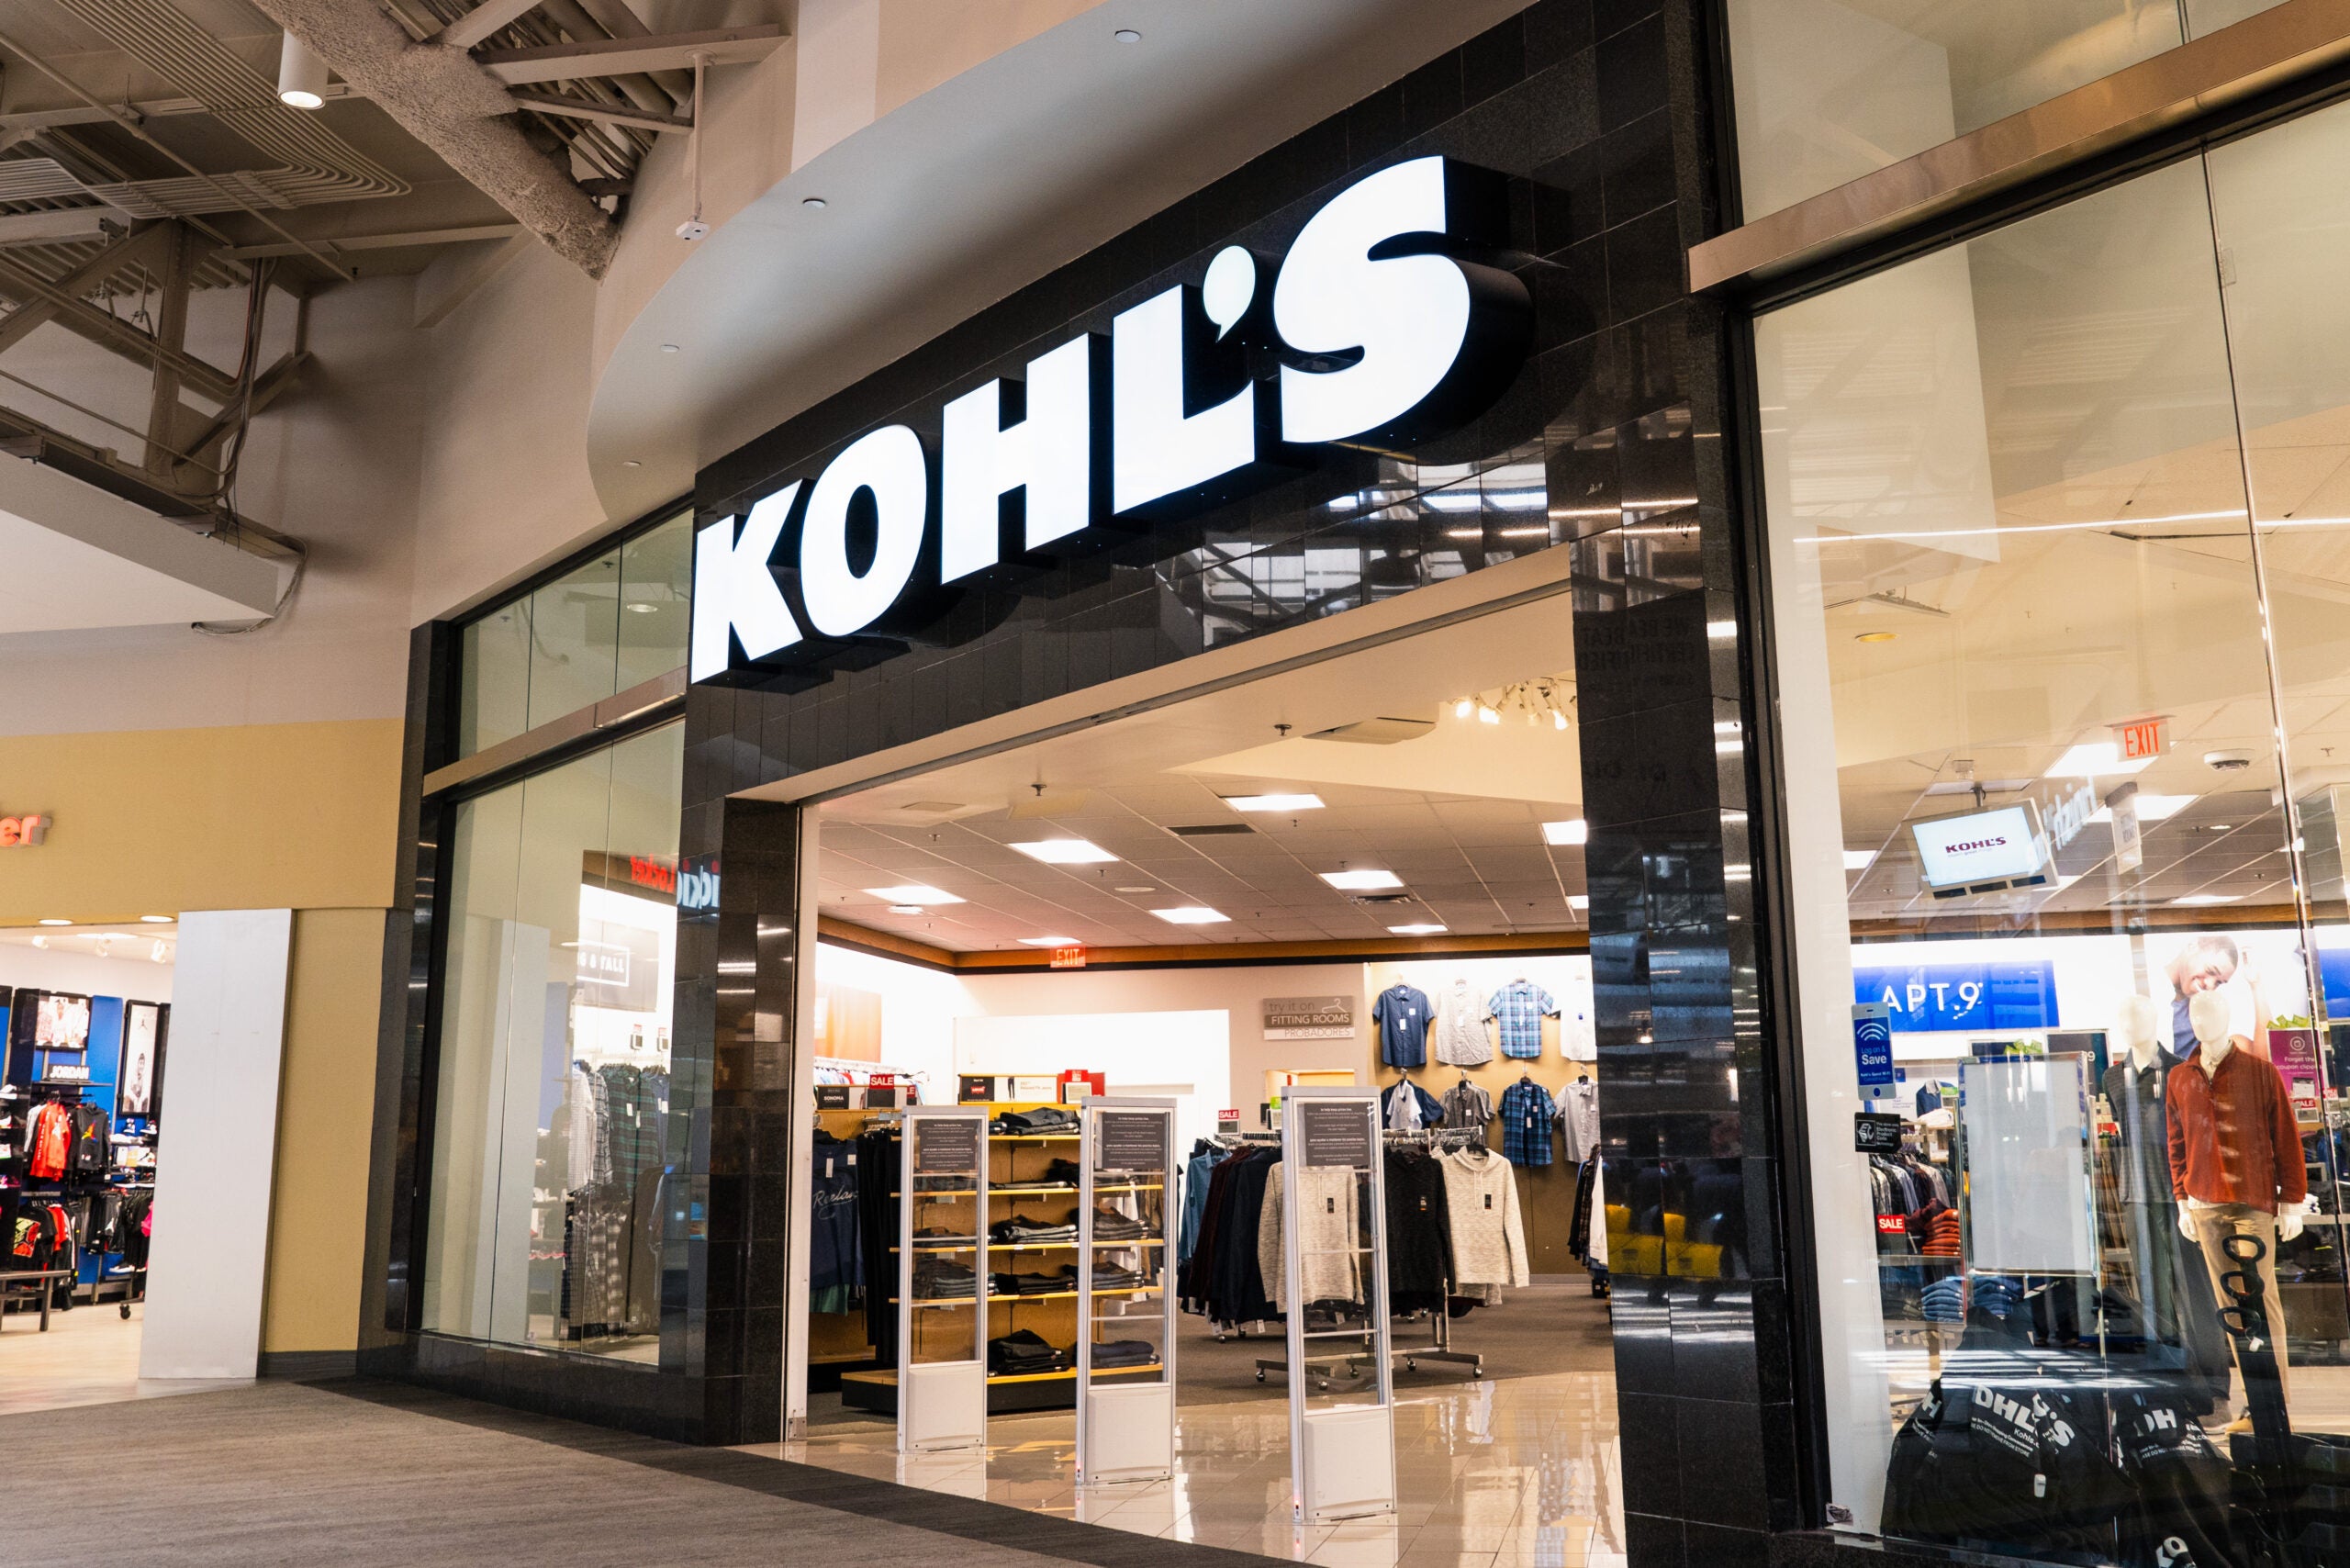 Sephora To Open Mini Shops Inside Kohl's Stores - CBS Boston